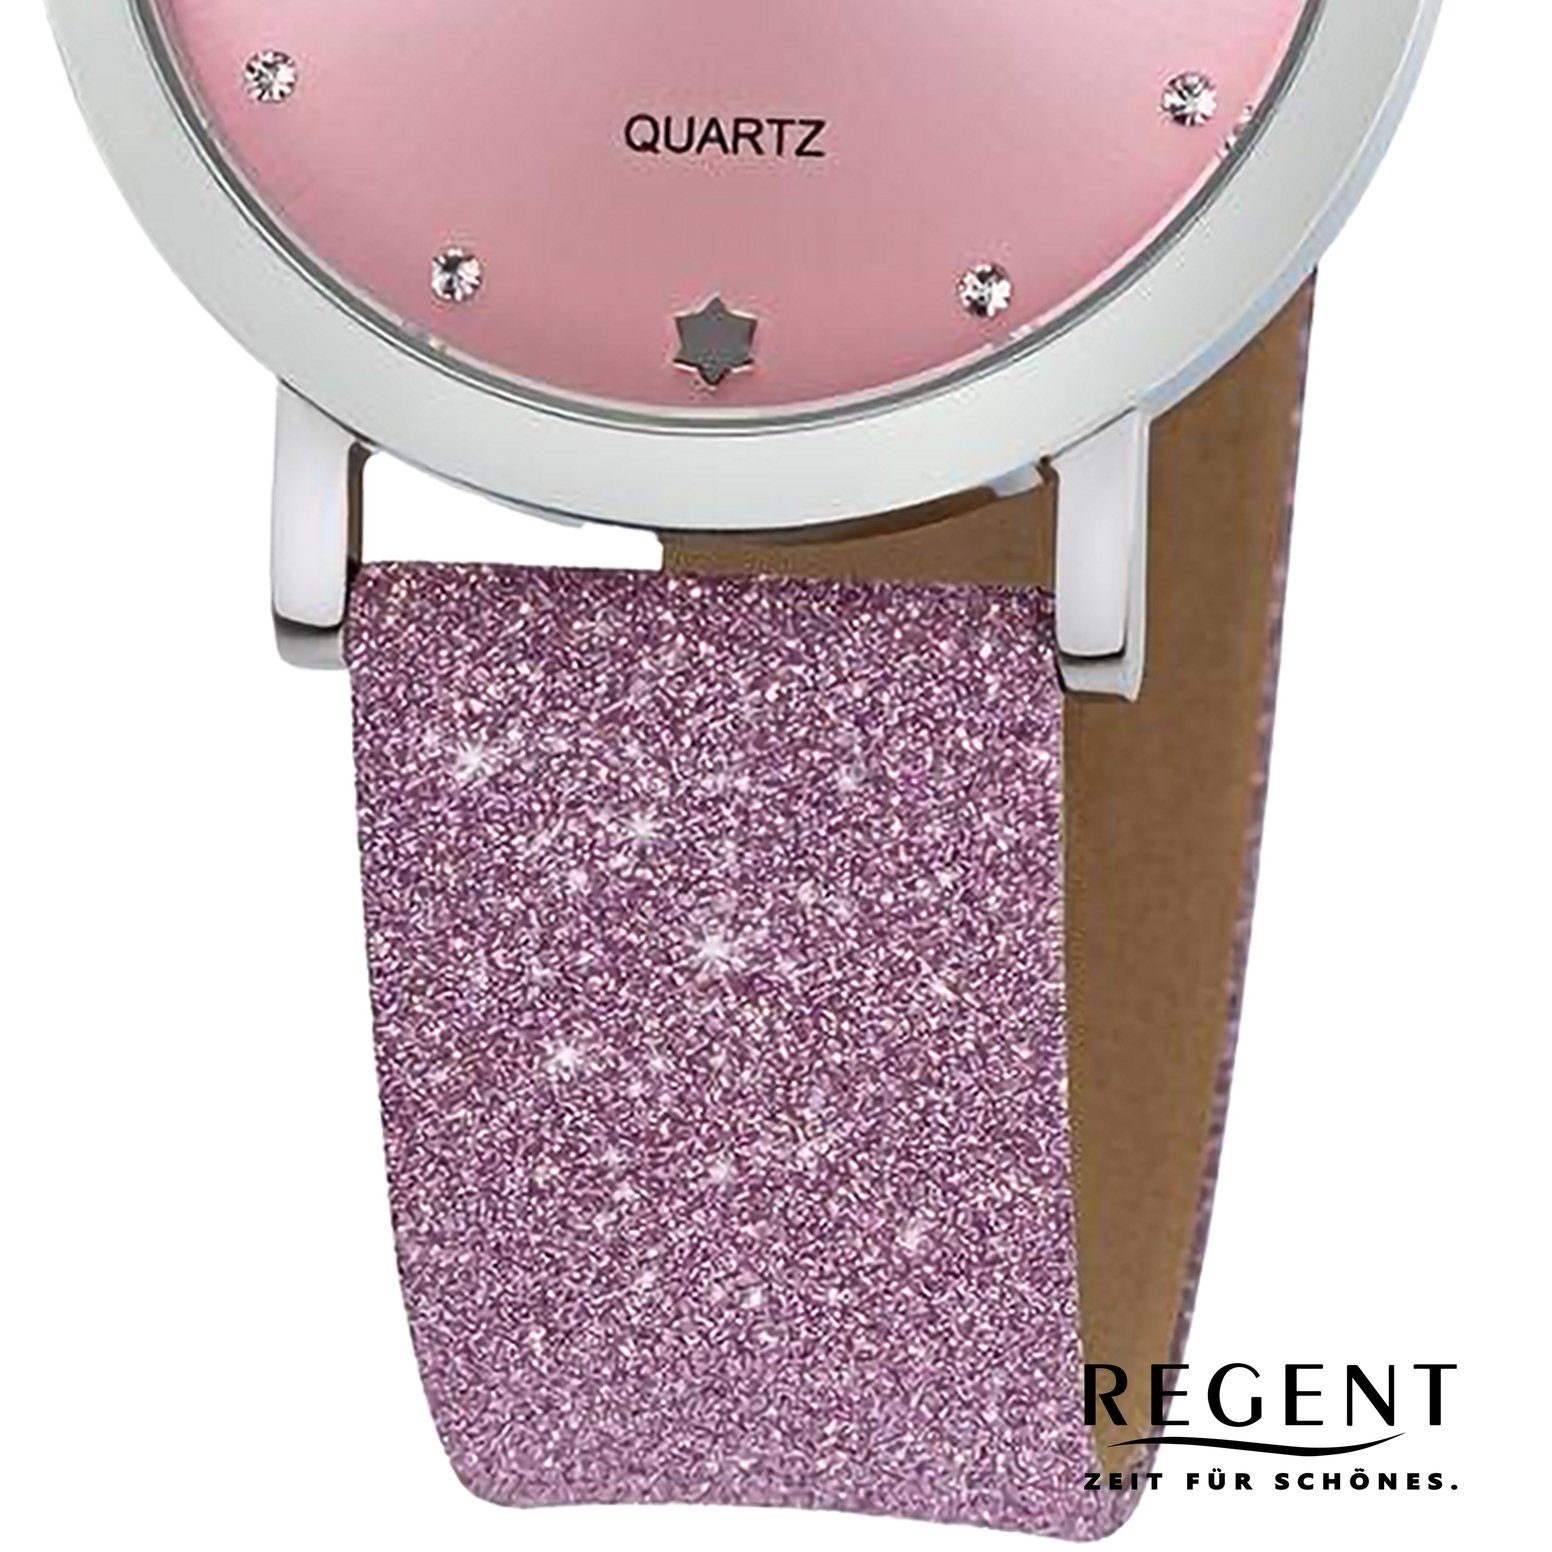 Armbanduhr groß (ca. Damen Analog, Quarzuhr extra 32,5mm), rund, Regent Damen Armbanduhr Lederarmband Regent